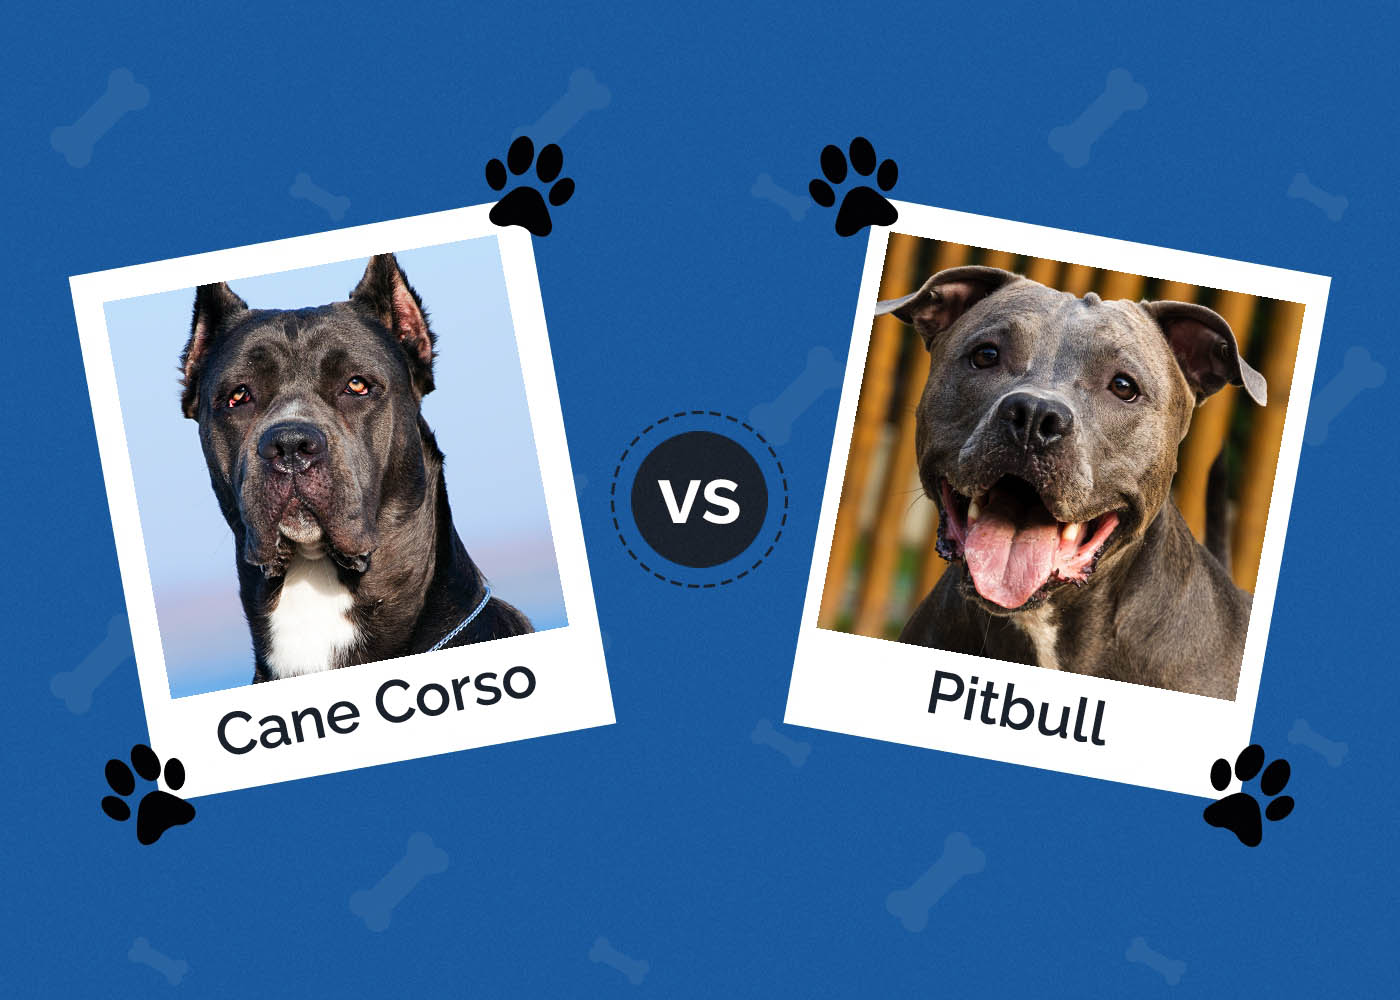 Cane Corso vs Pitbull